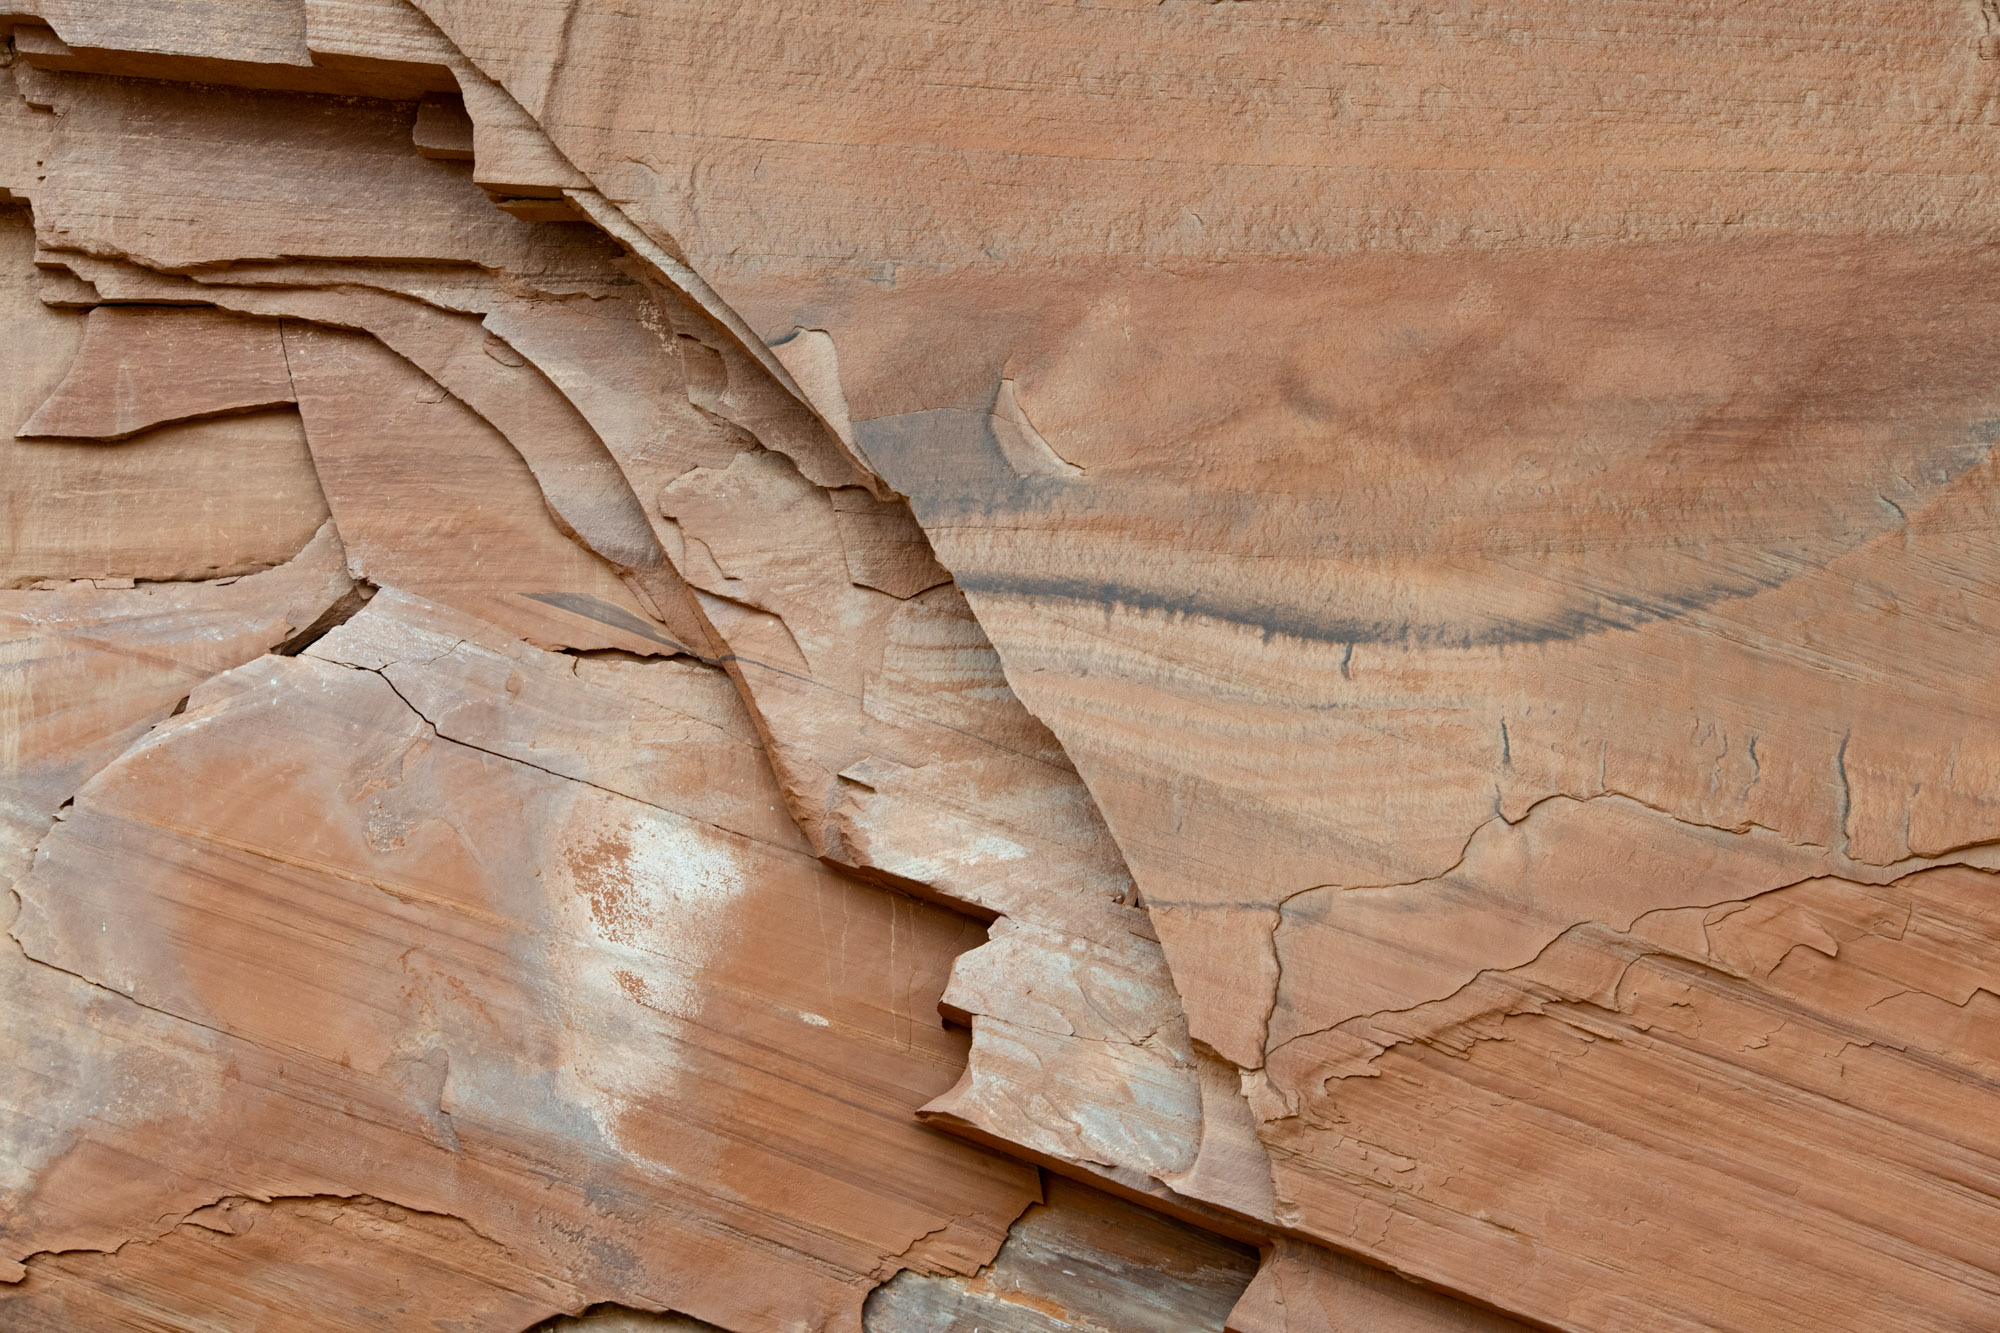 canyon de chelly, navajo, native american, chinle, arizona, american indian, navajo indian, abstracts